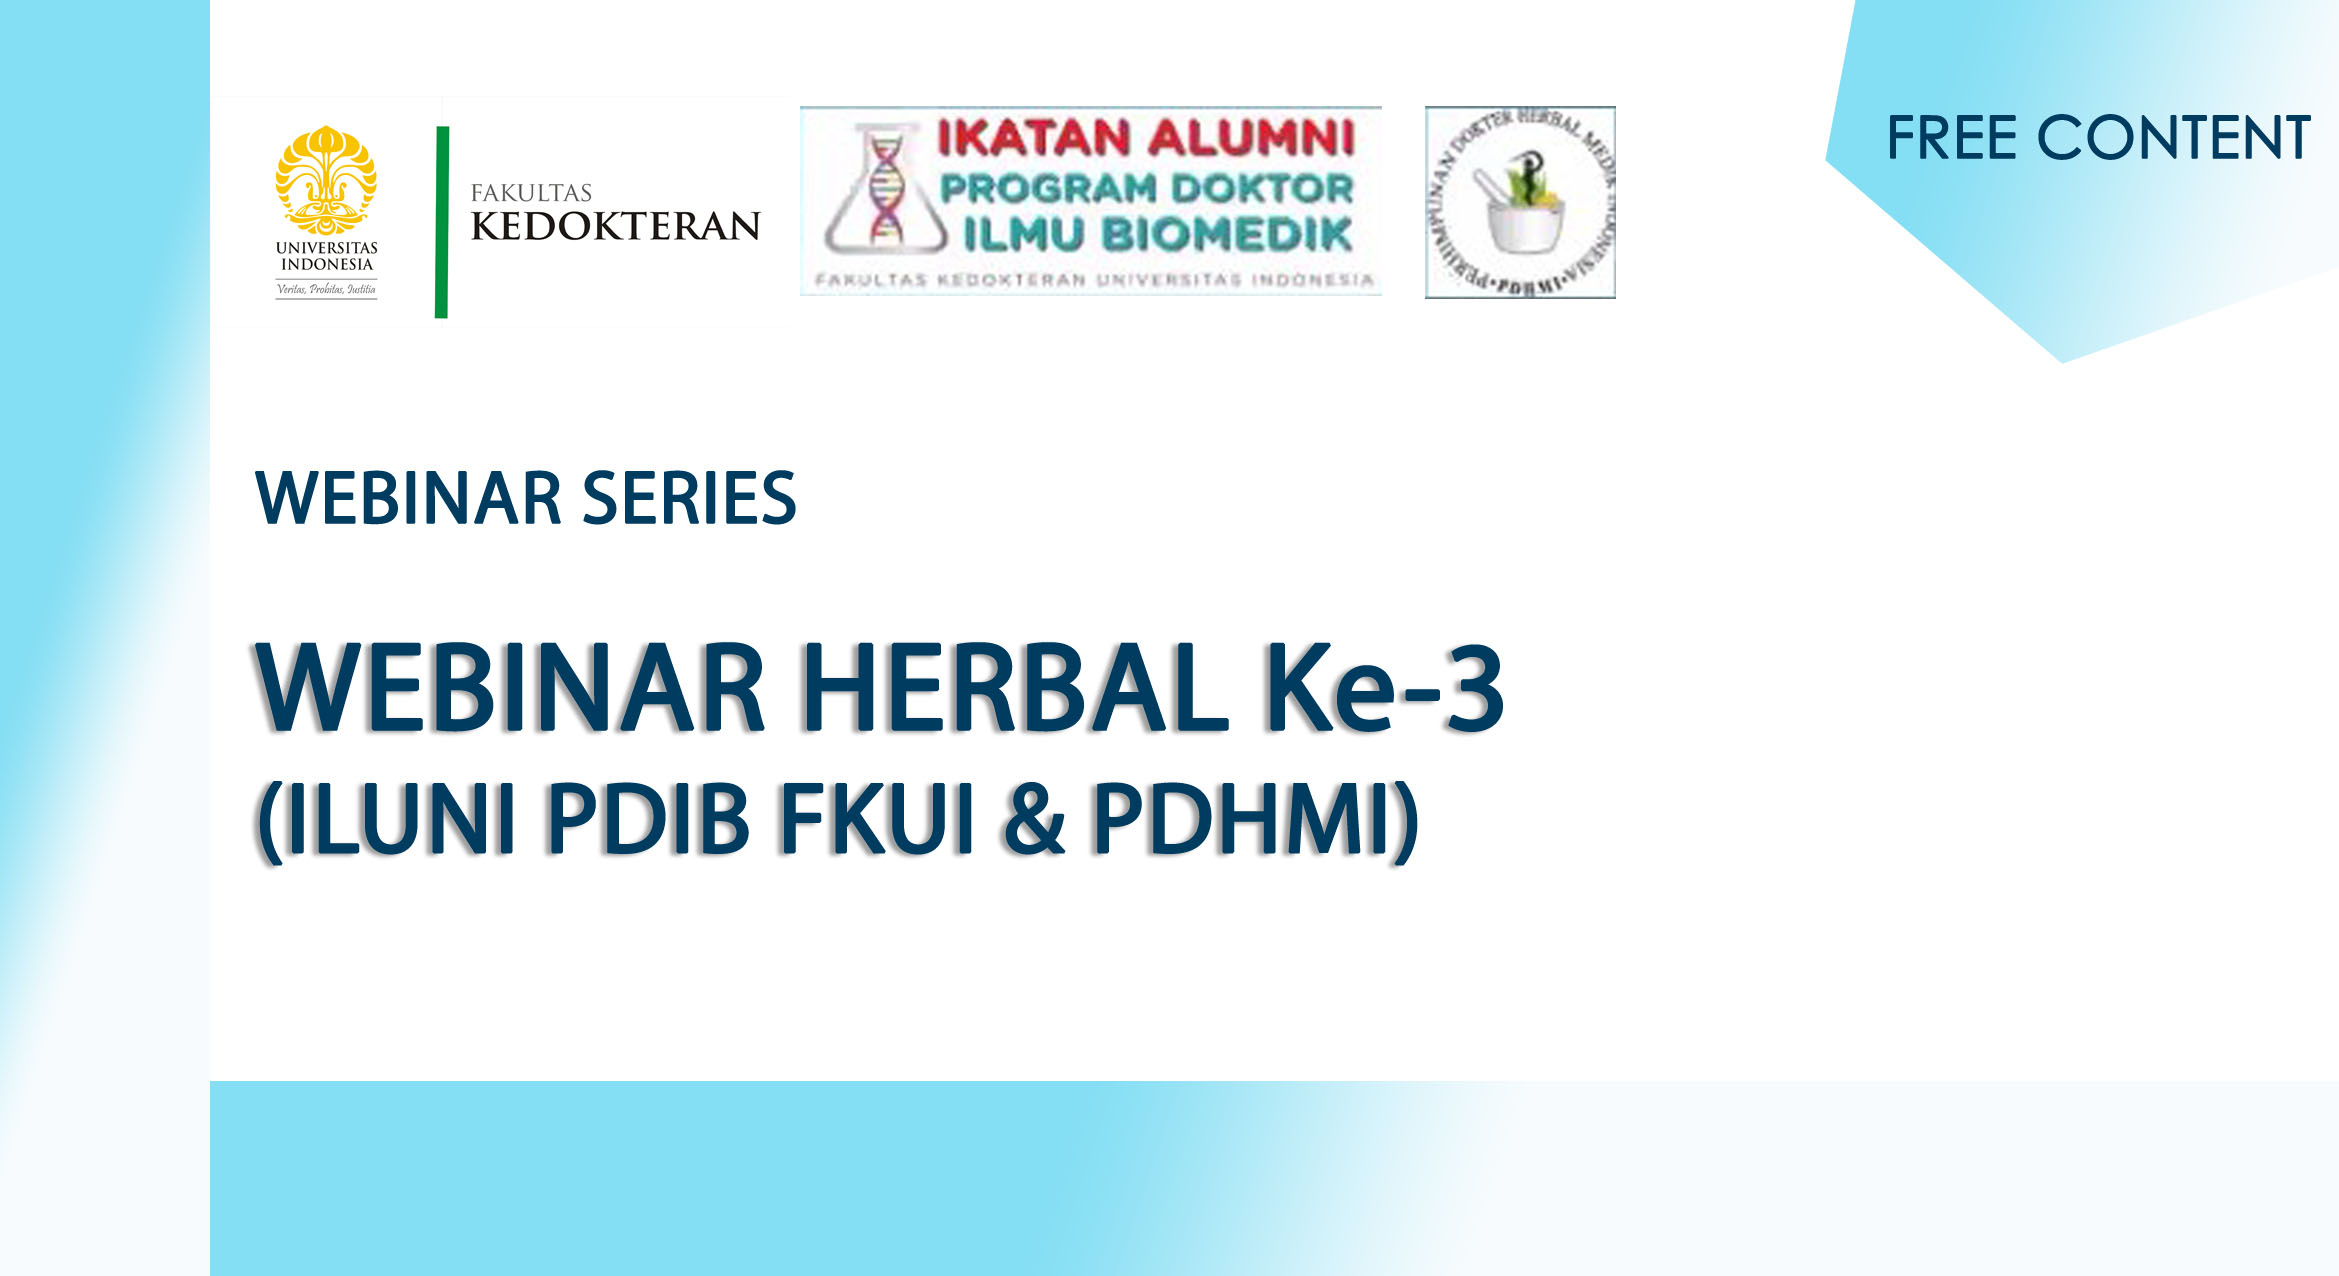 Webinar Herbal Series Ke-3 ILUNI PDIB & PDHMI Special Update COVID-19